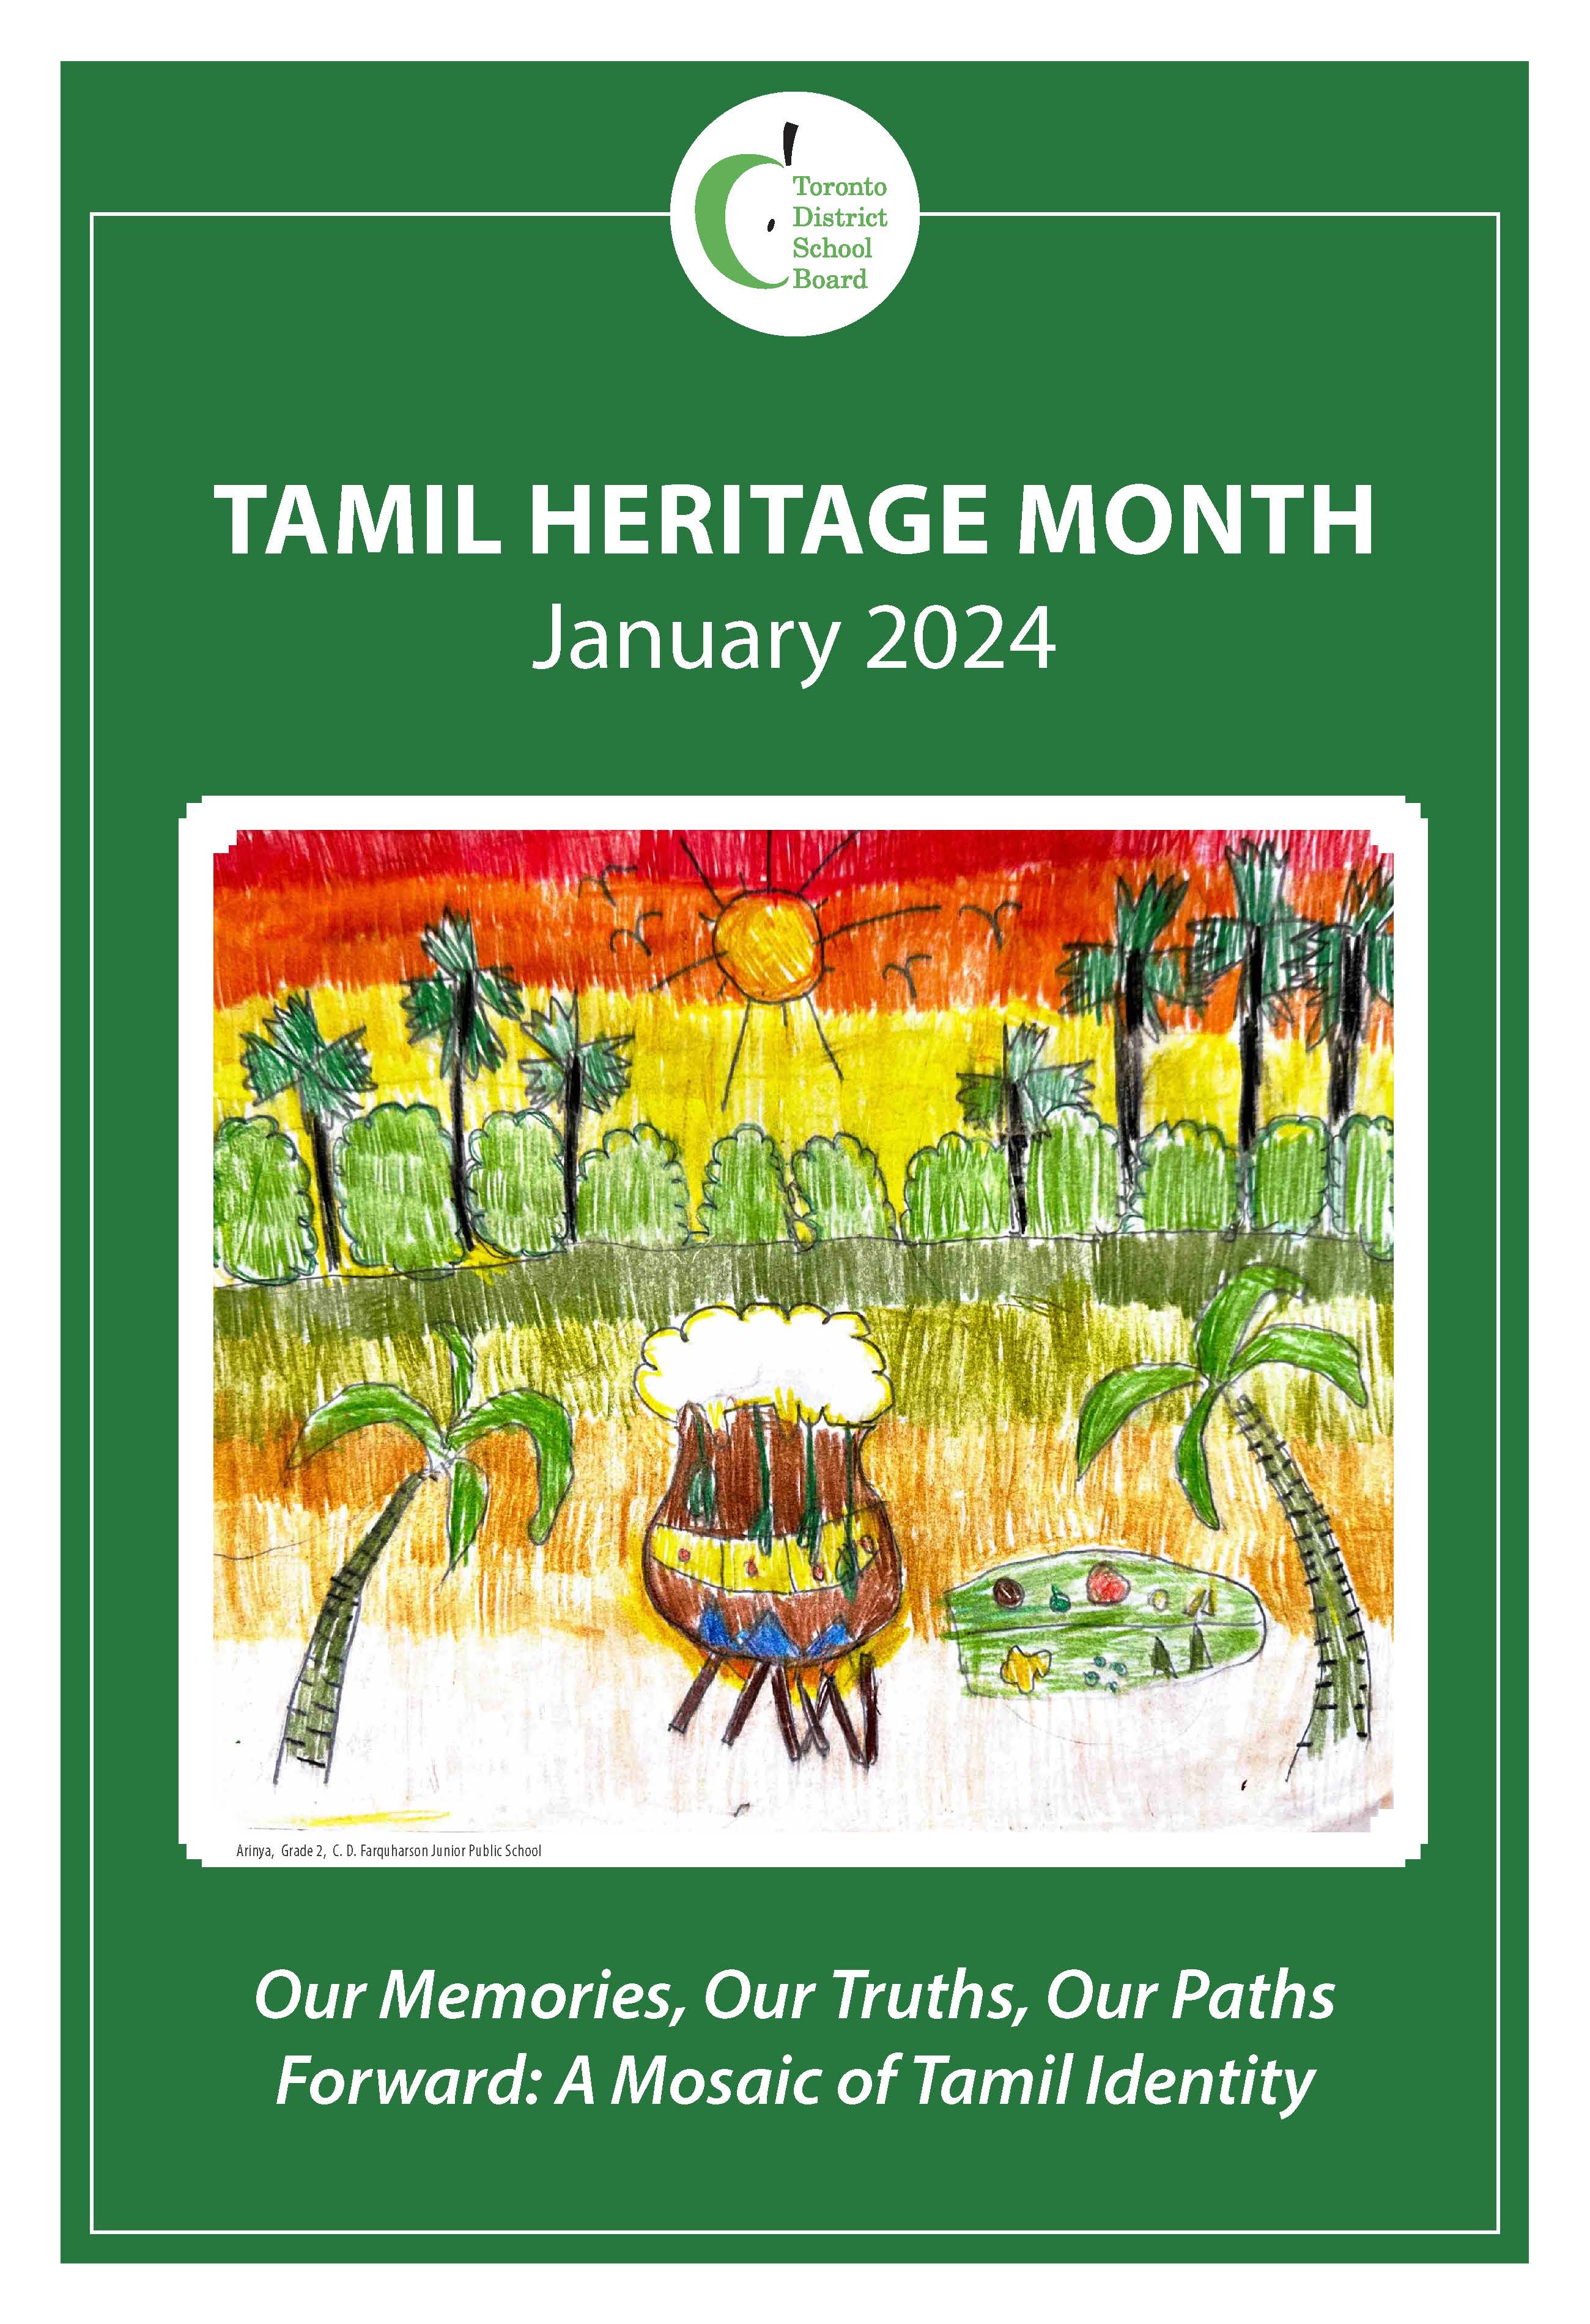 Tamil Heritage Month post 1